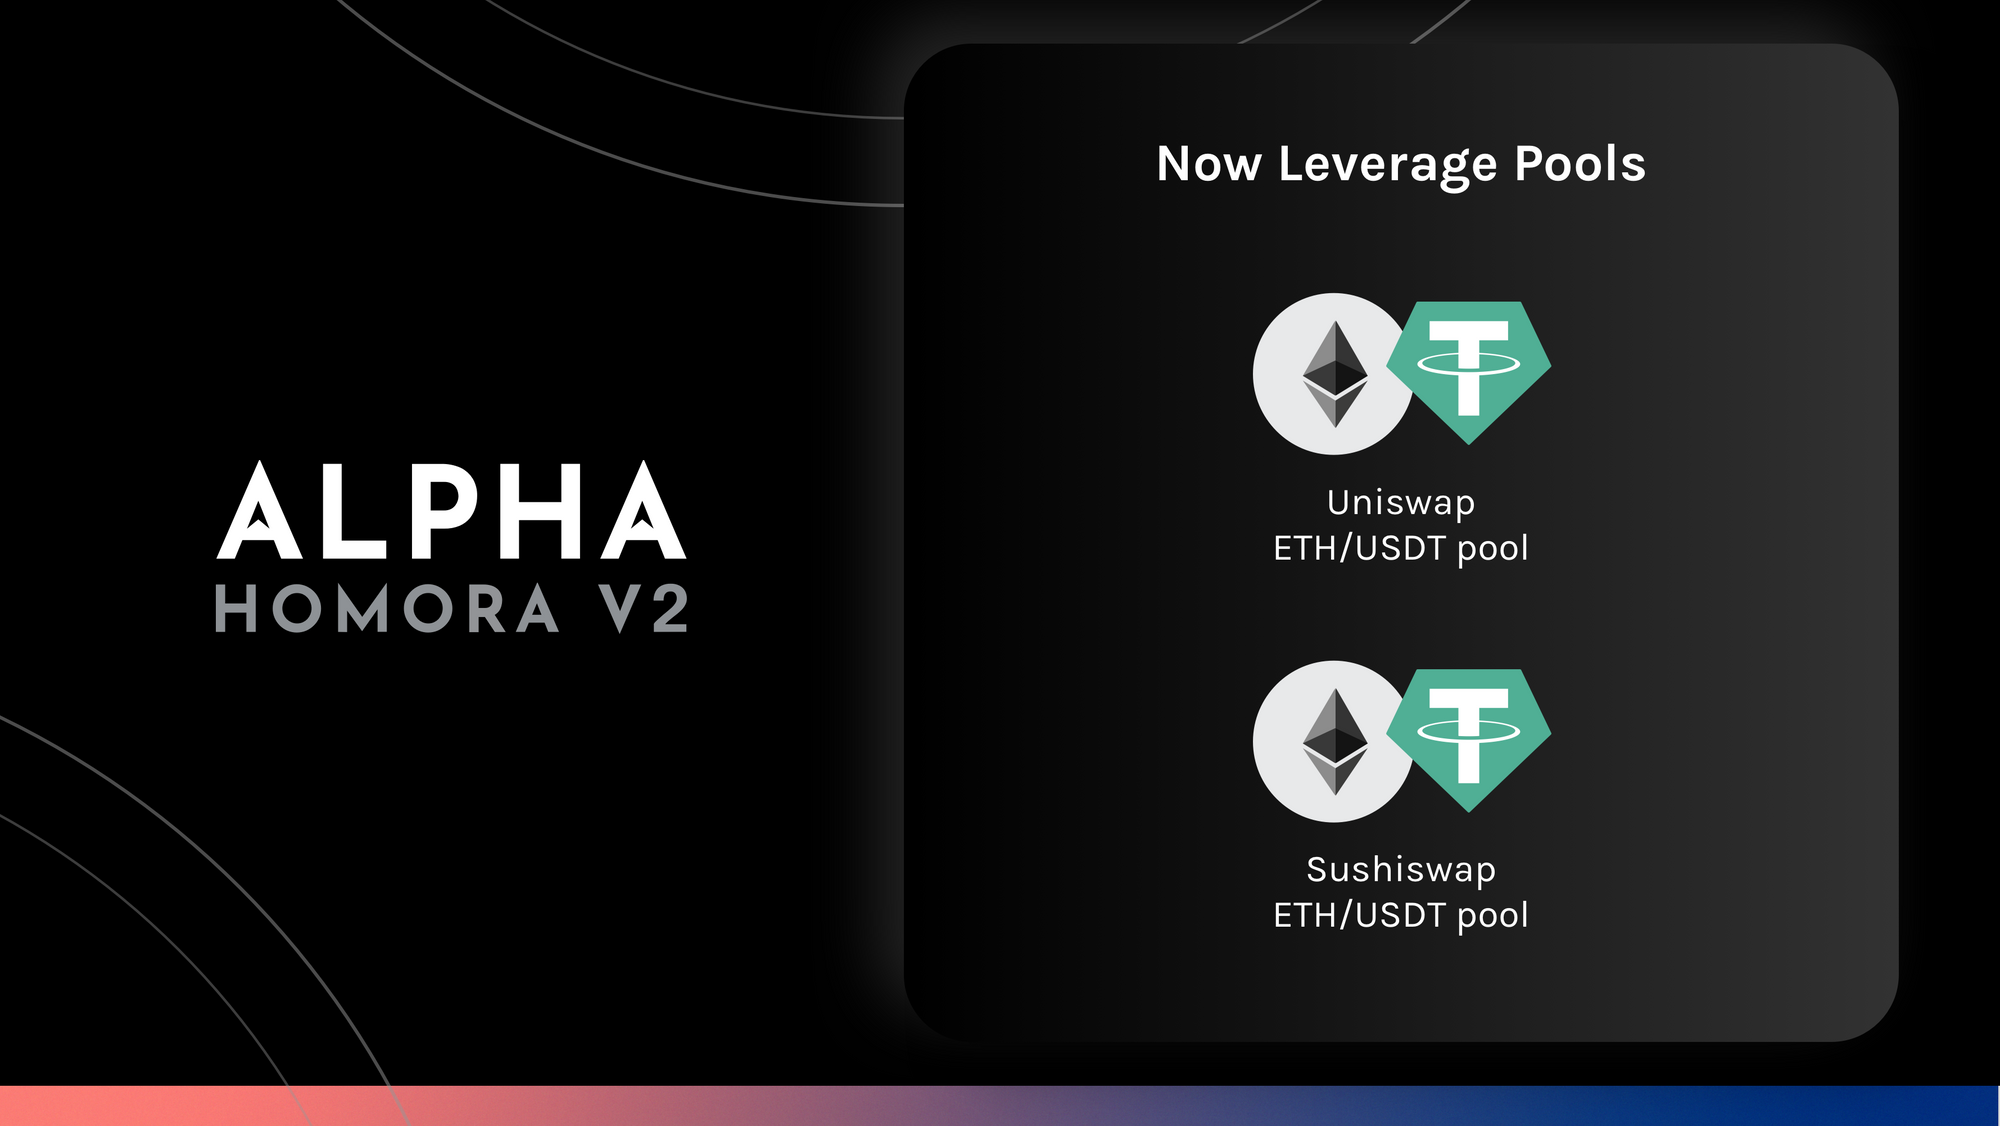 Alpha Homora V2 Adds Leveraged ETH/USDT Pools on Uniswap & Sushiswap